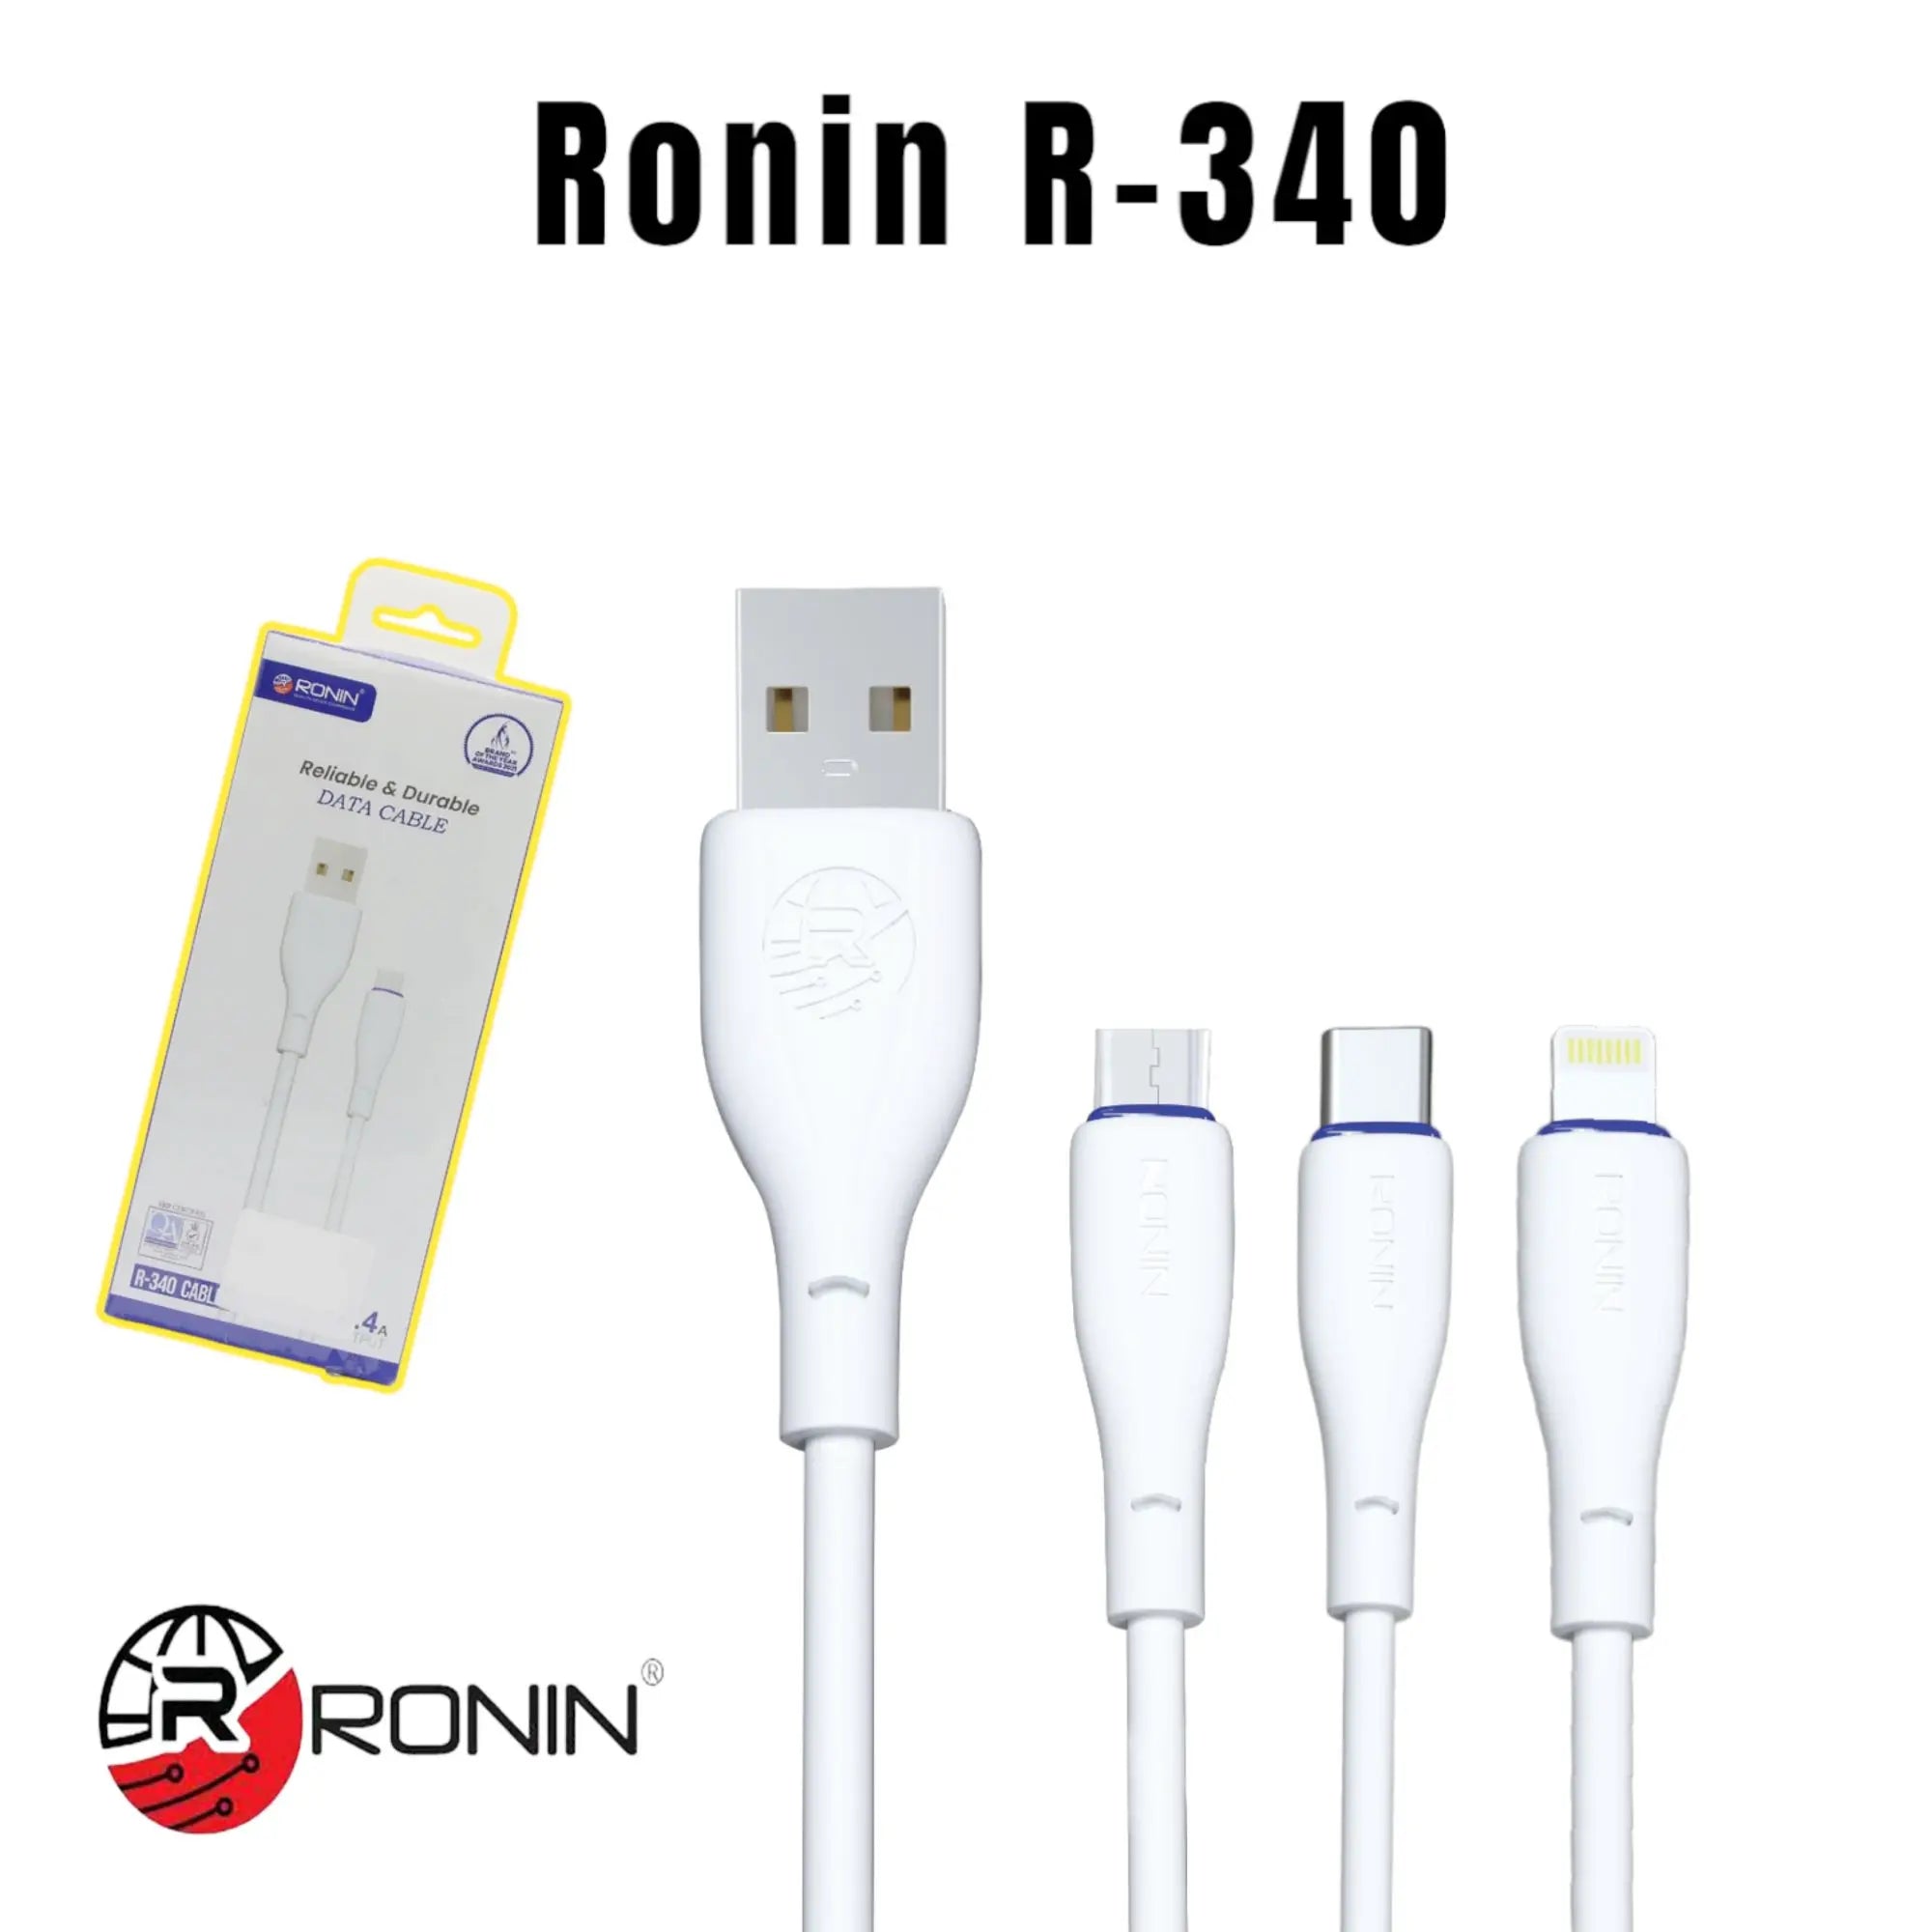 Ronin R-340